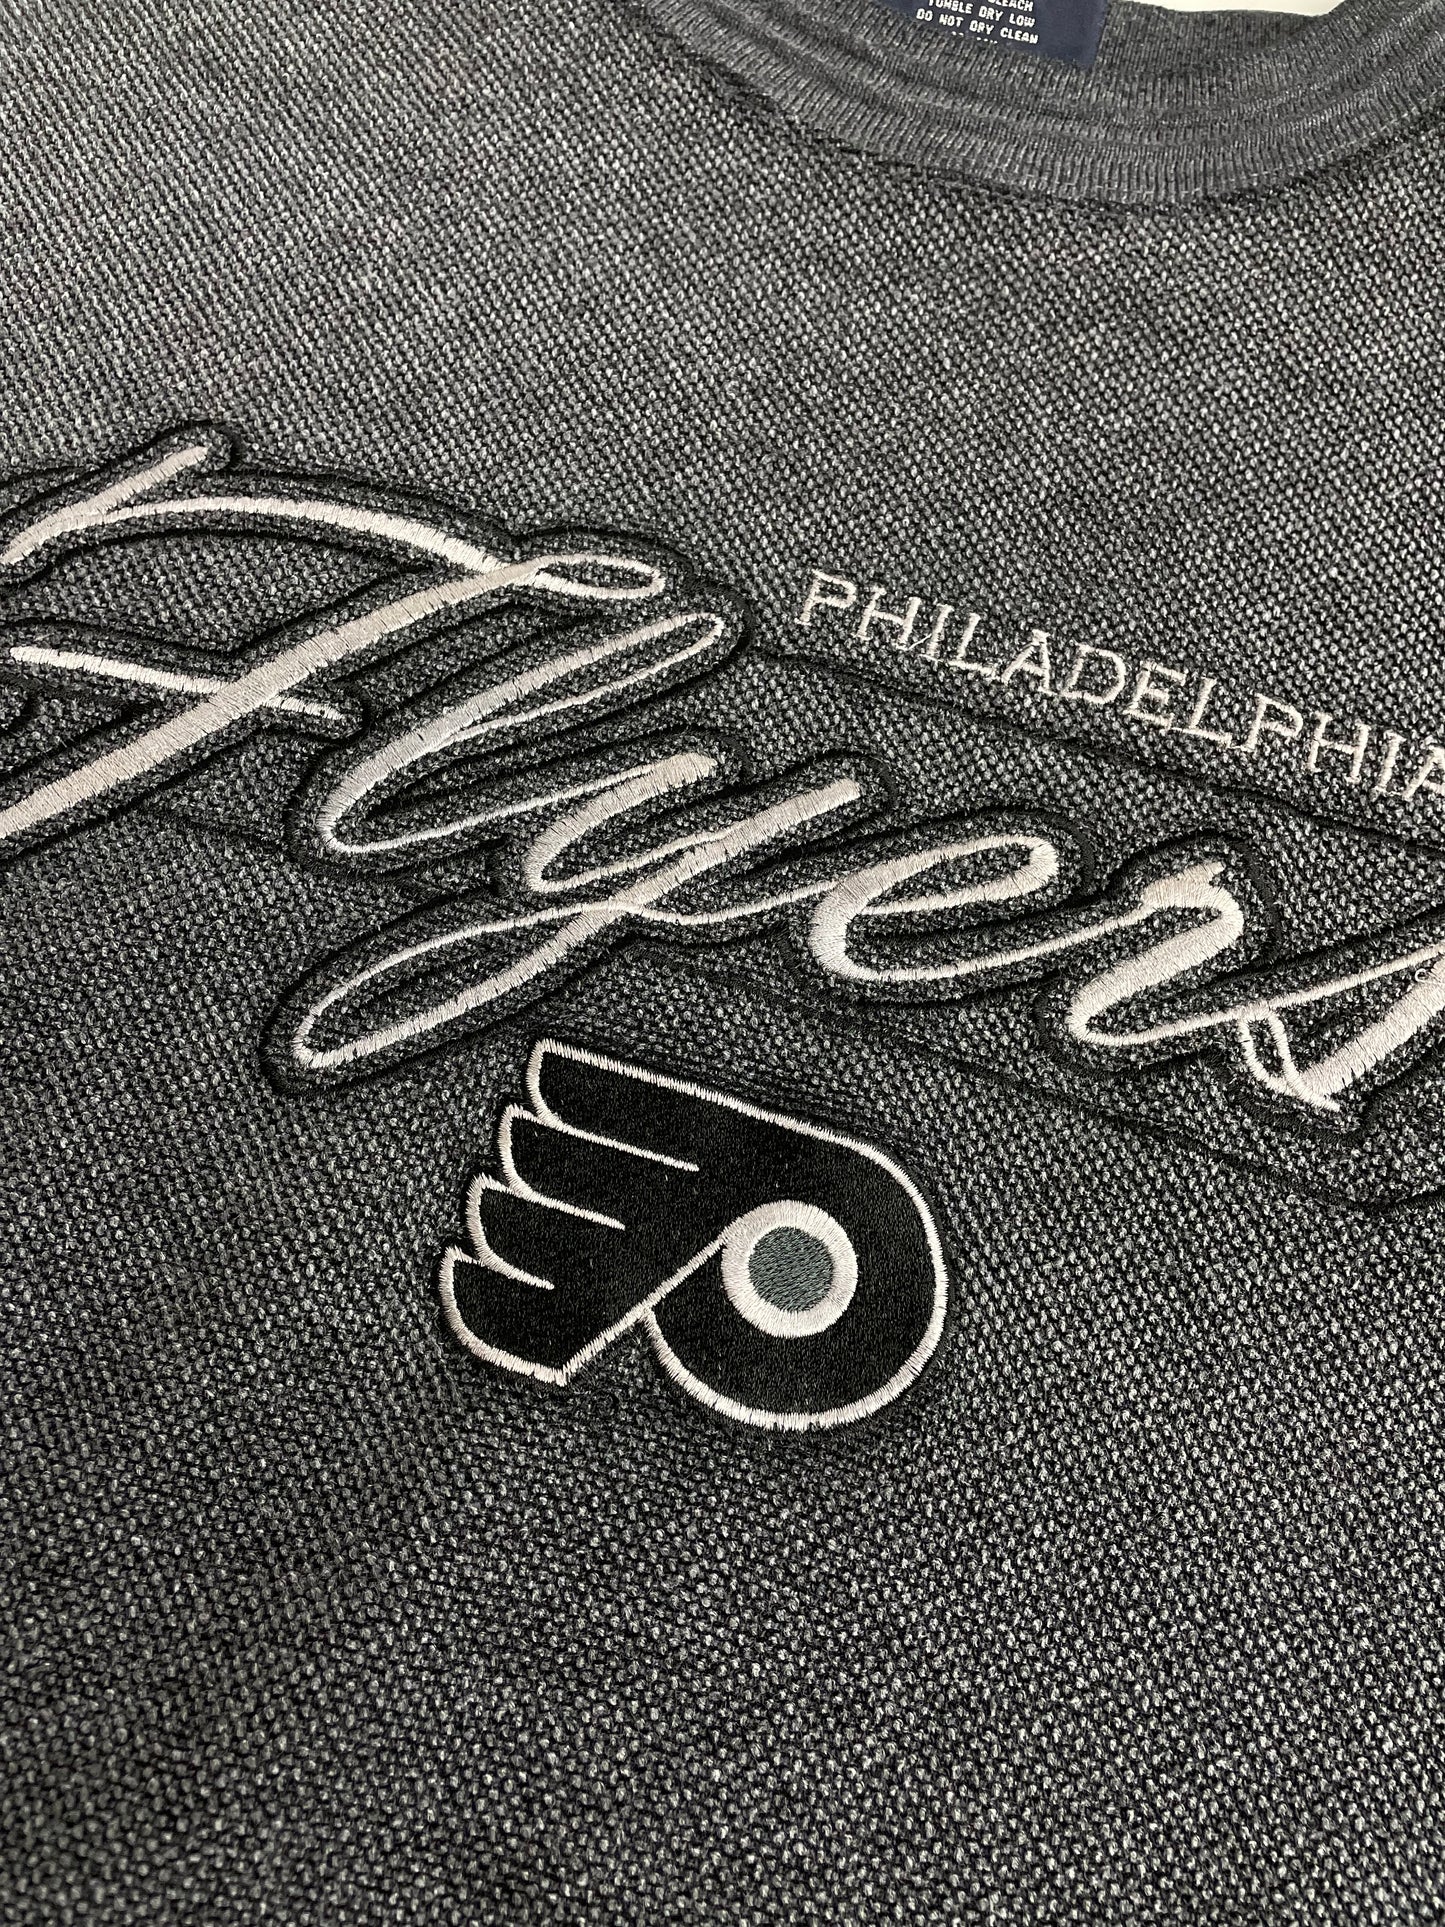 00s Lee Sport Philadelphia Flyers Sweatshirt Grey Black XL